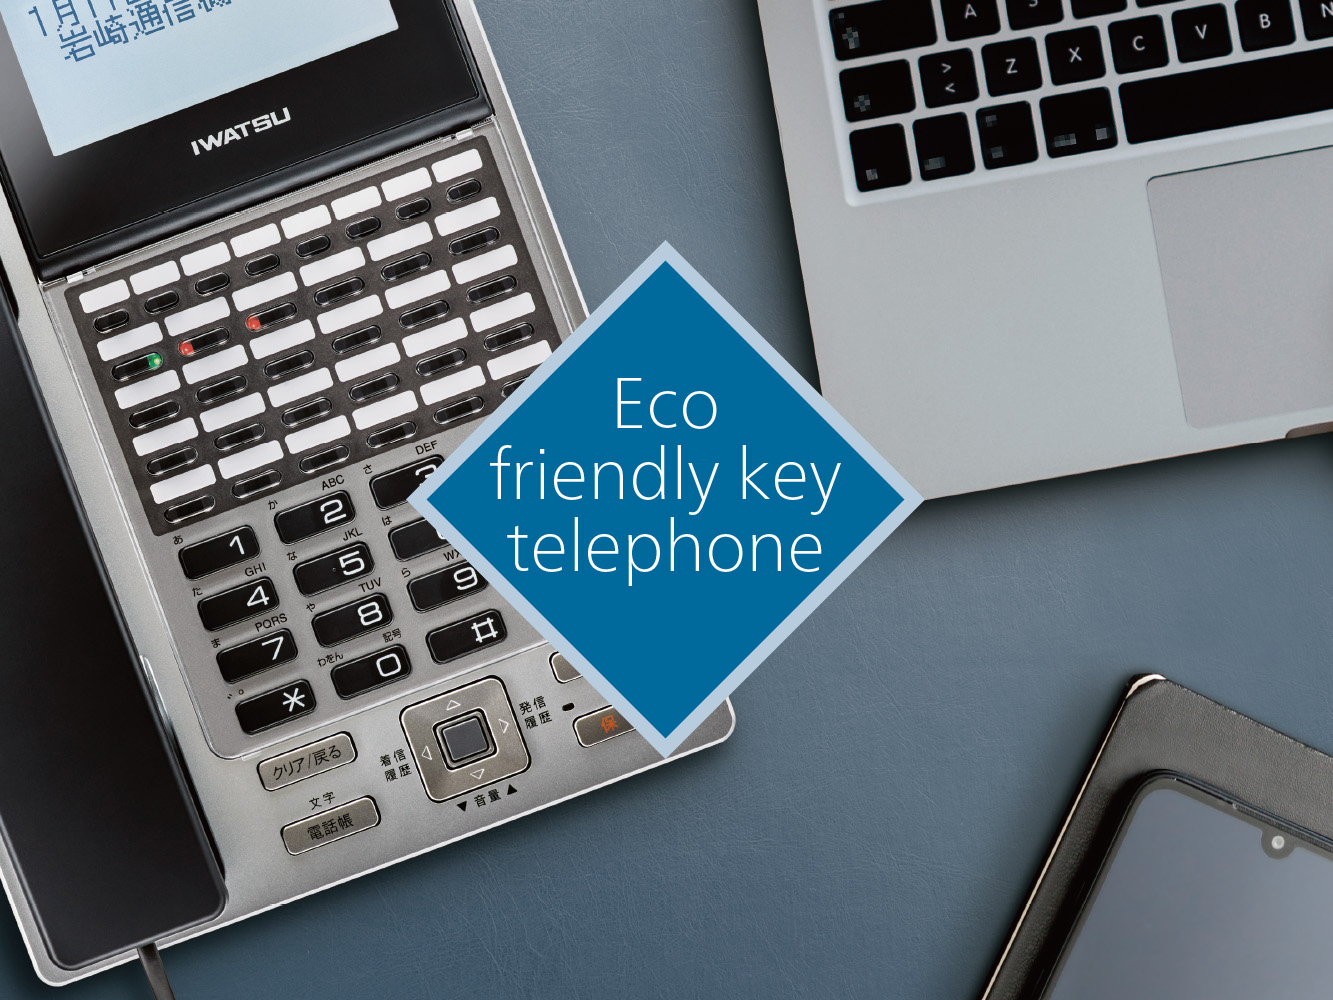 Eco friendly key telephoneイメージ